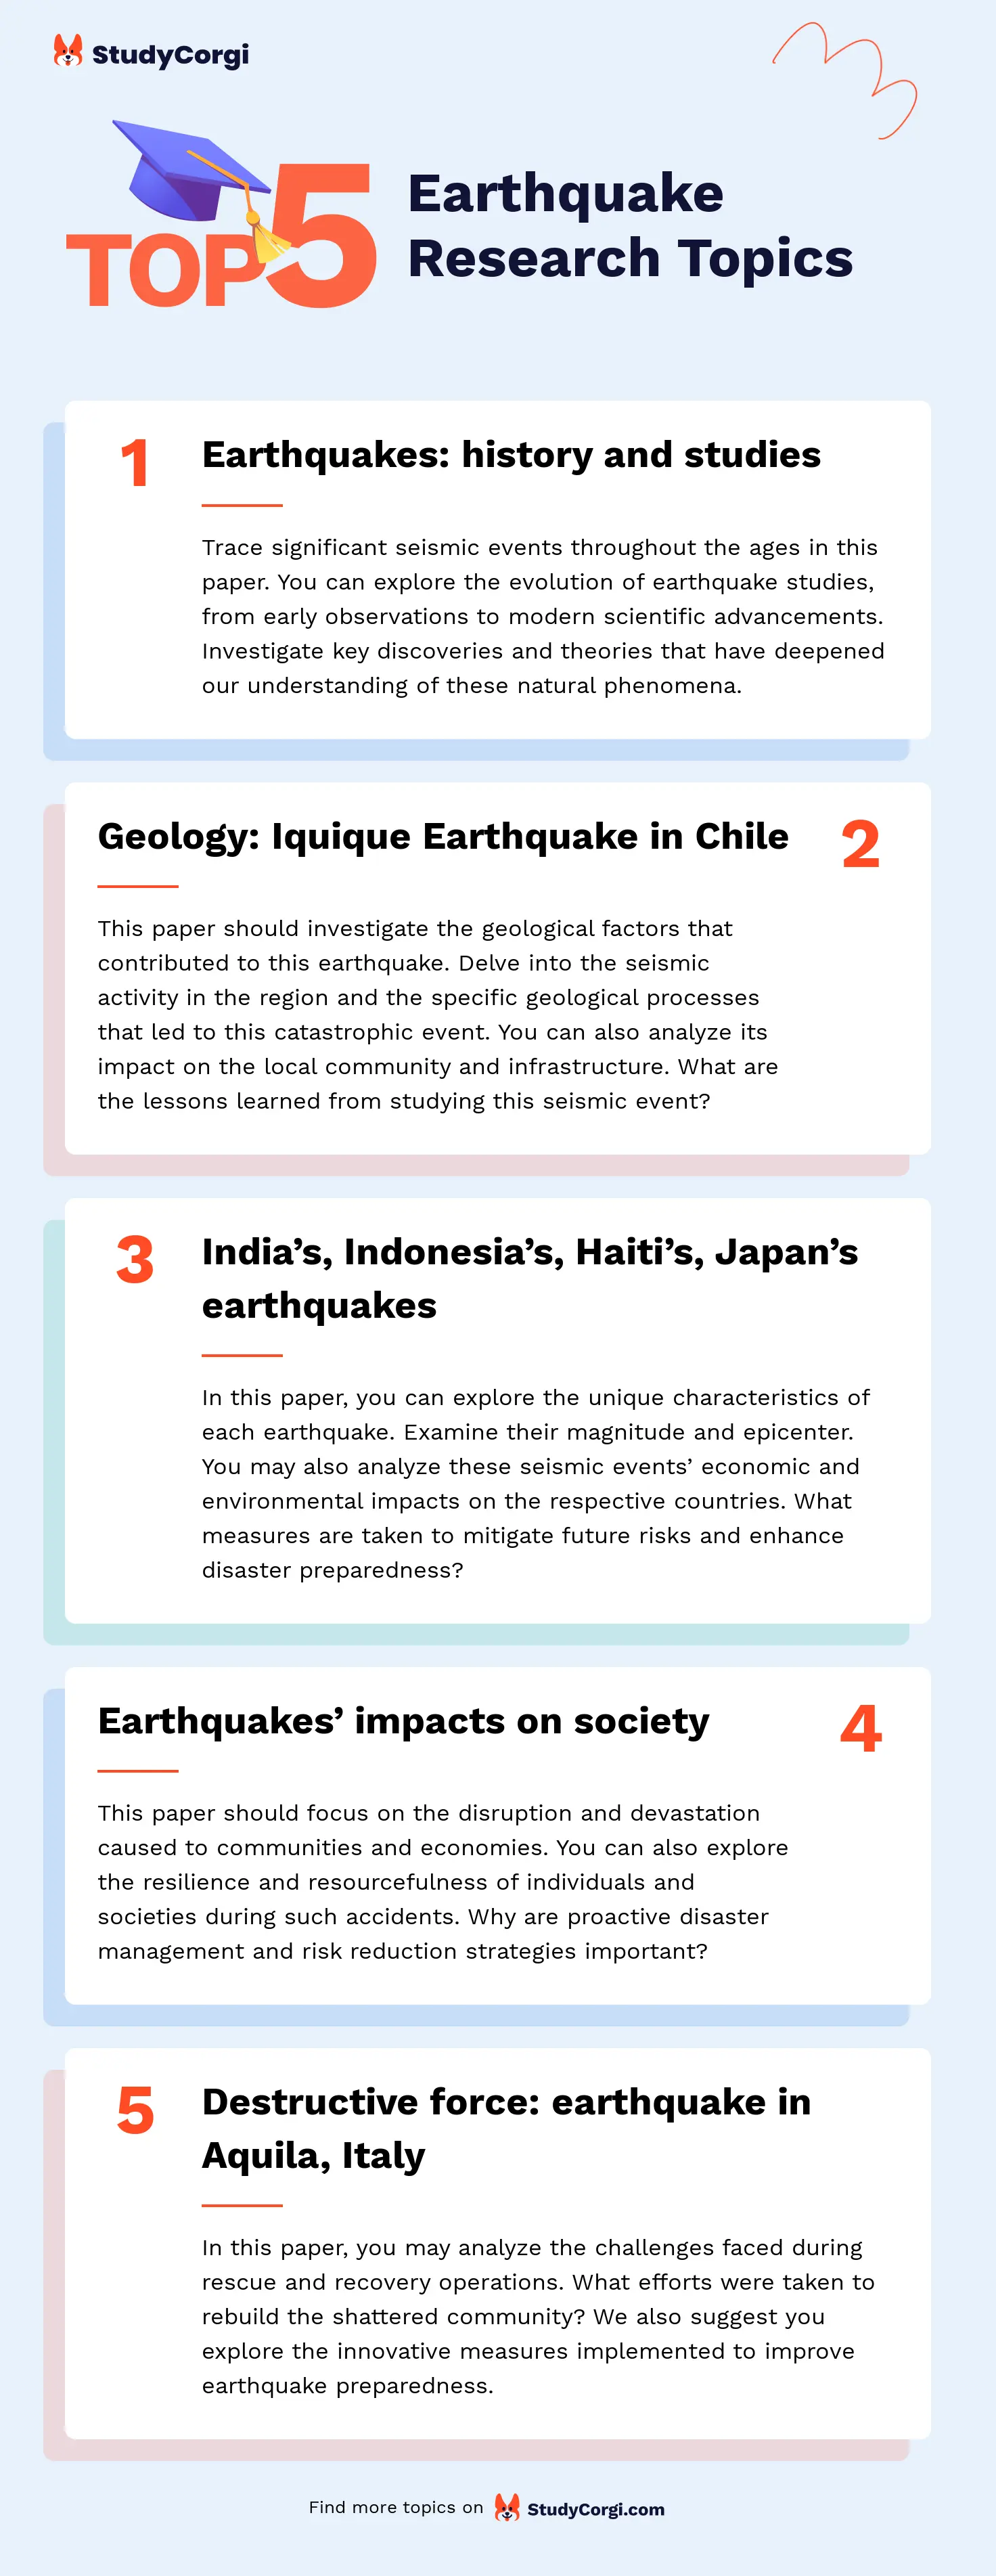 TOP-5 Earthquake Research Topics